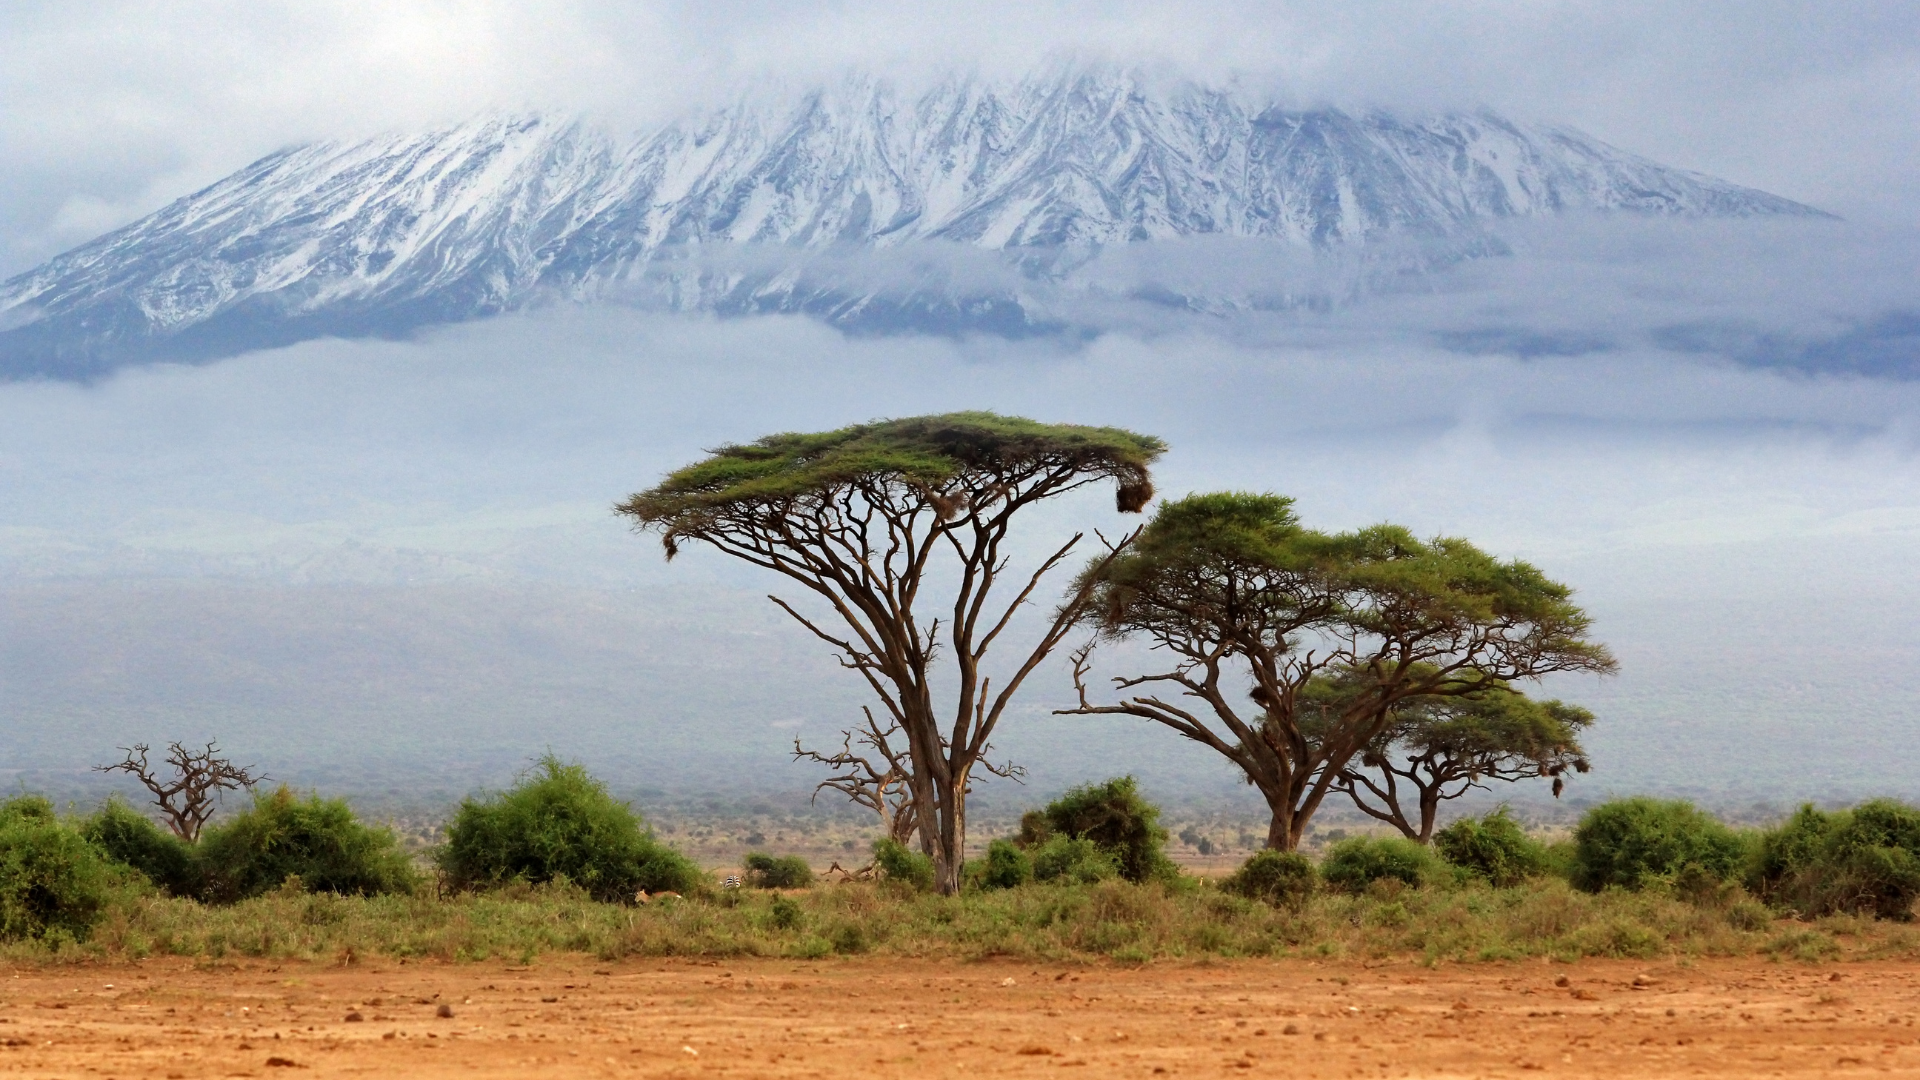 Tanzania is the latest bucket list destination for ultramarathon athletes –  running up Mount Kilimanjaro included